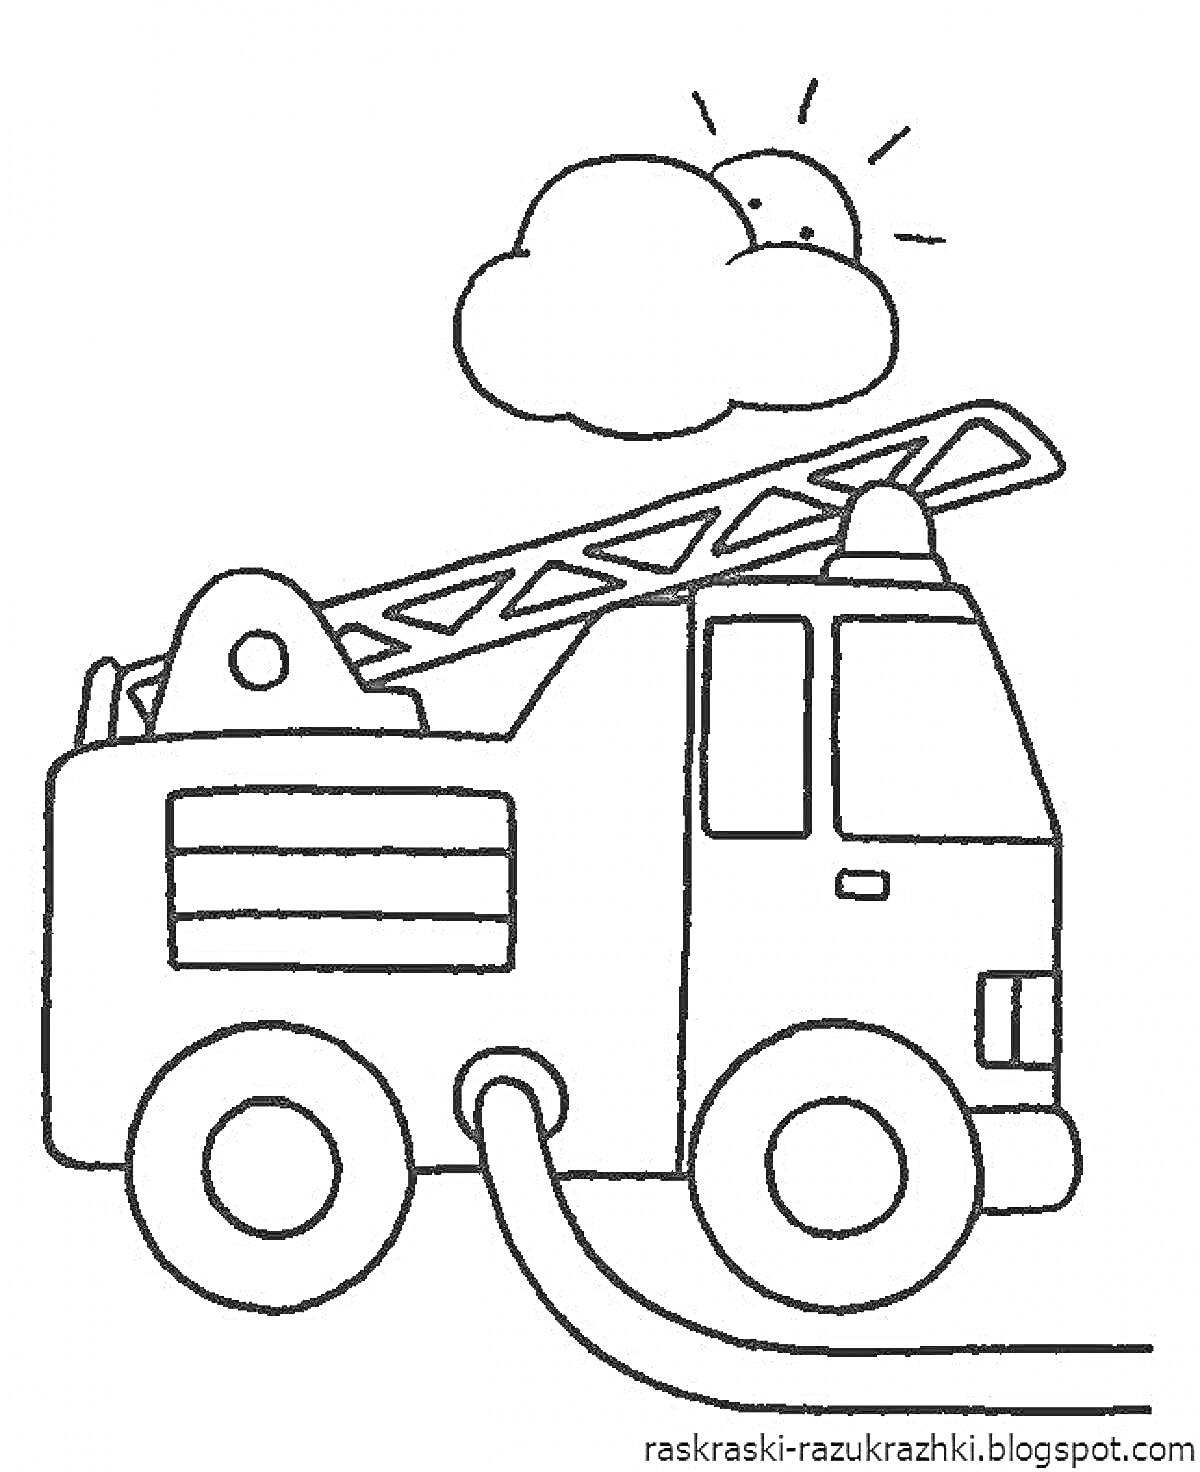 На раскраске изображено: Пожарная машина, Лестница, Шланг, Солнце, Транспорт, Облака